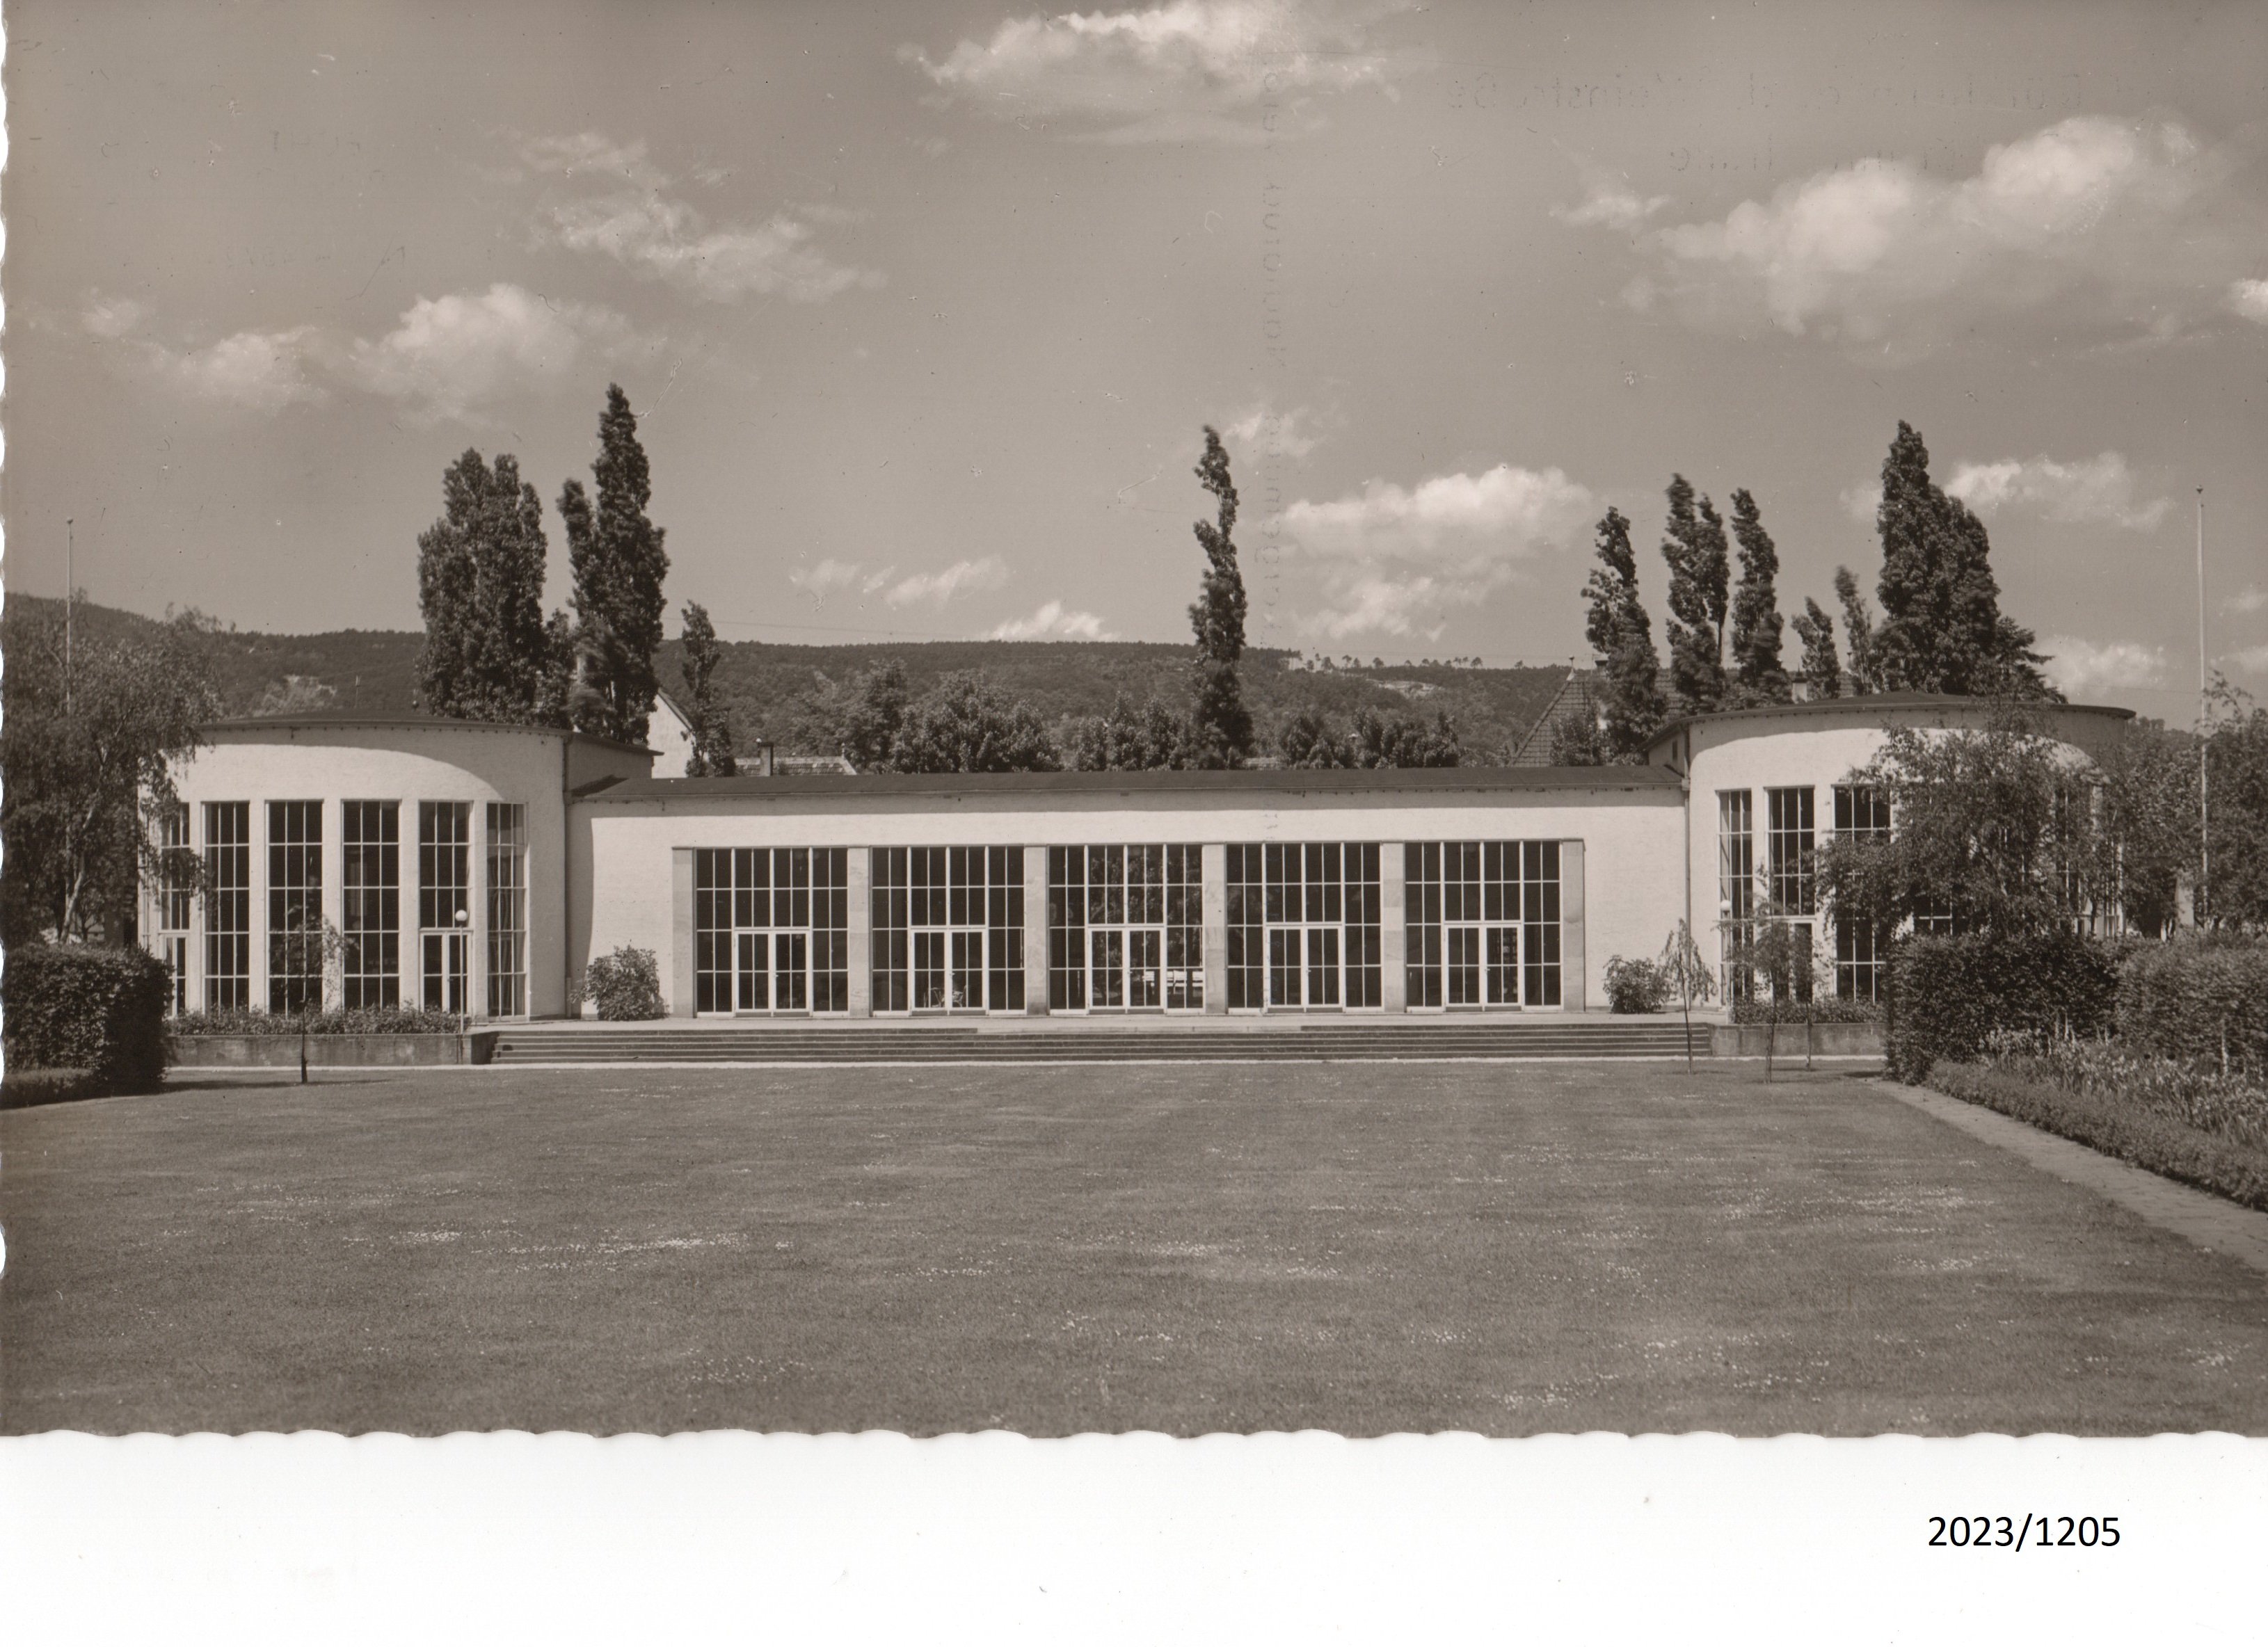 Bad Dürkheim, Brunnenhalle, 1950er Jahre (Stadtmuseum Bad Dürkheim im Kulturzentrum Haus Catoir CC BY-NC-SA)